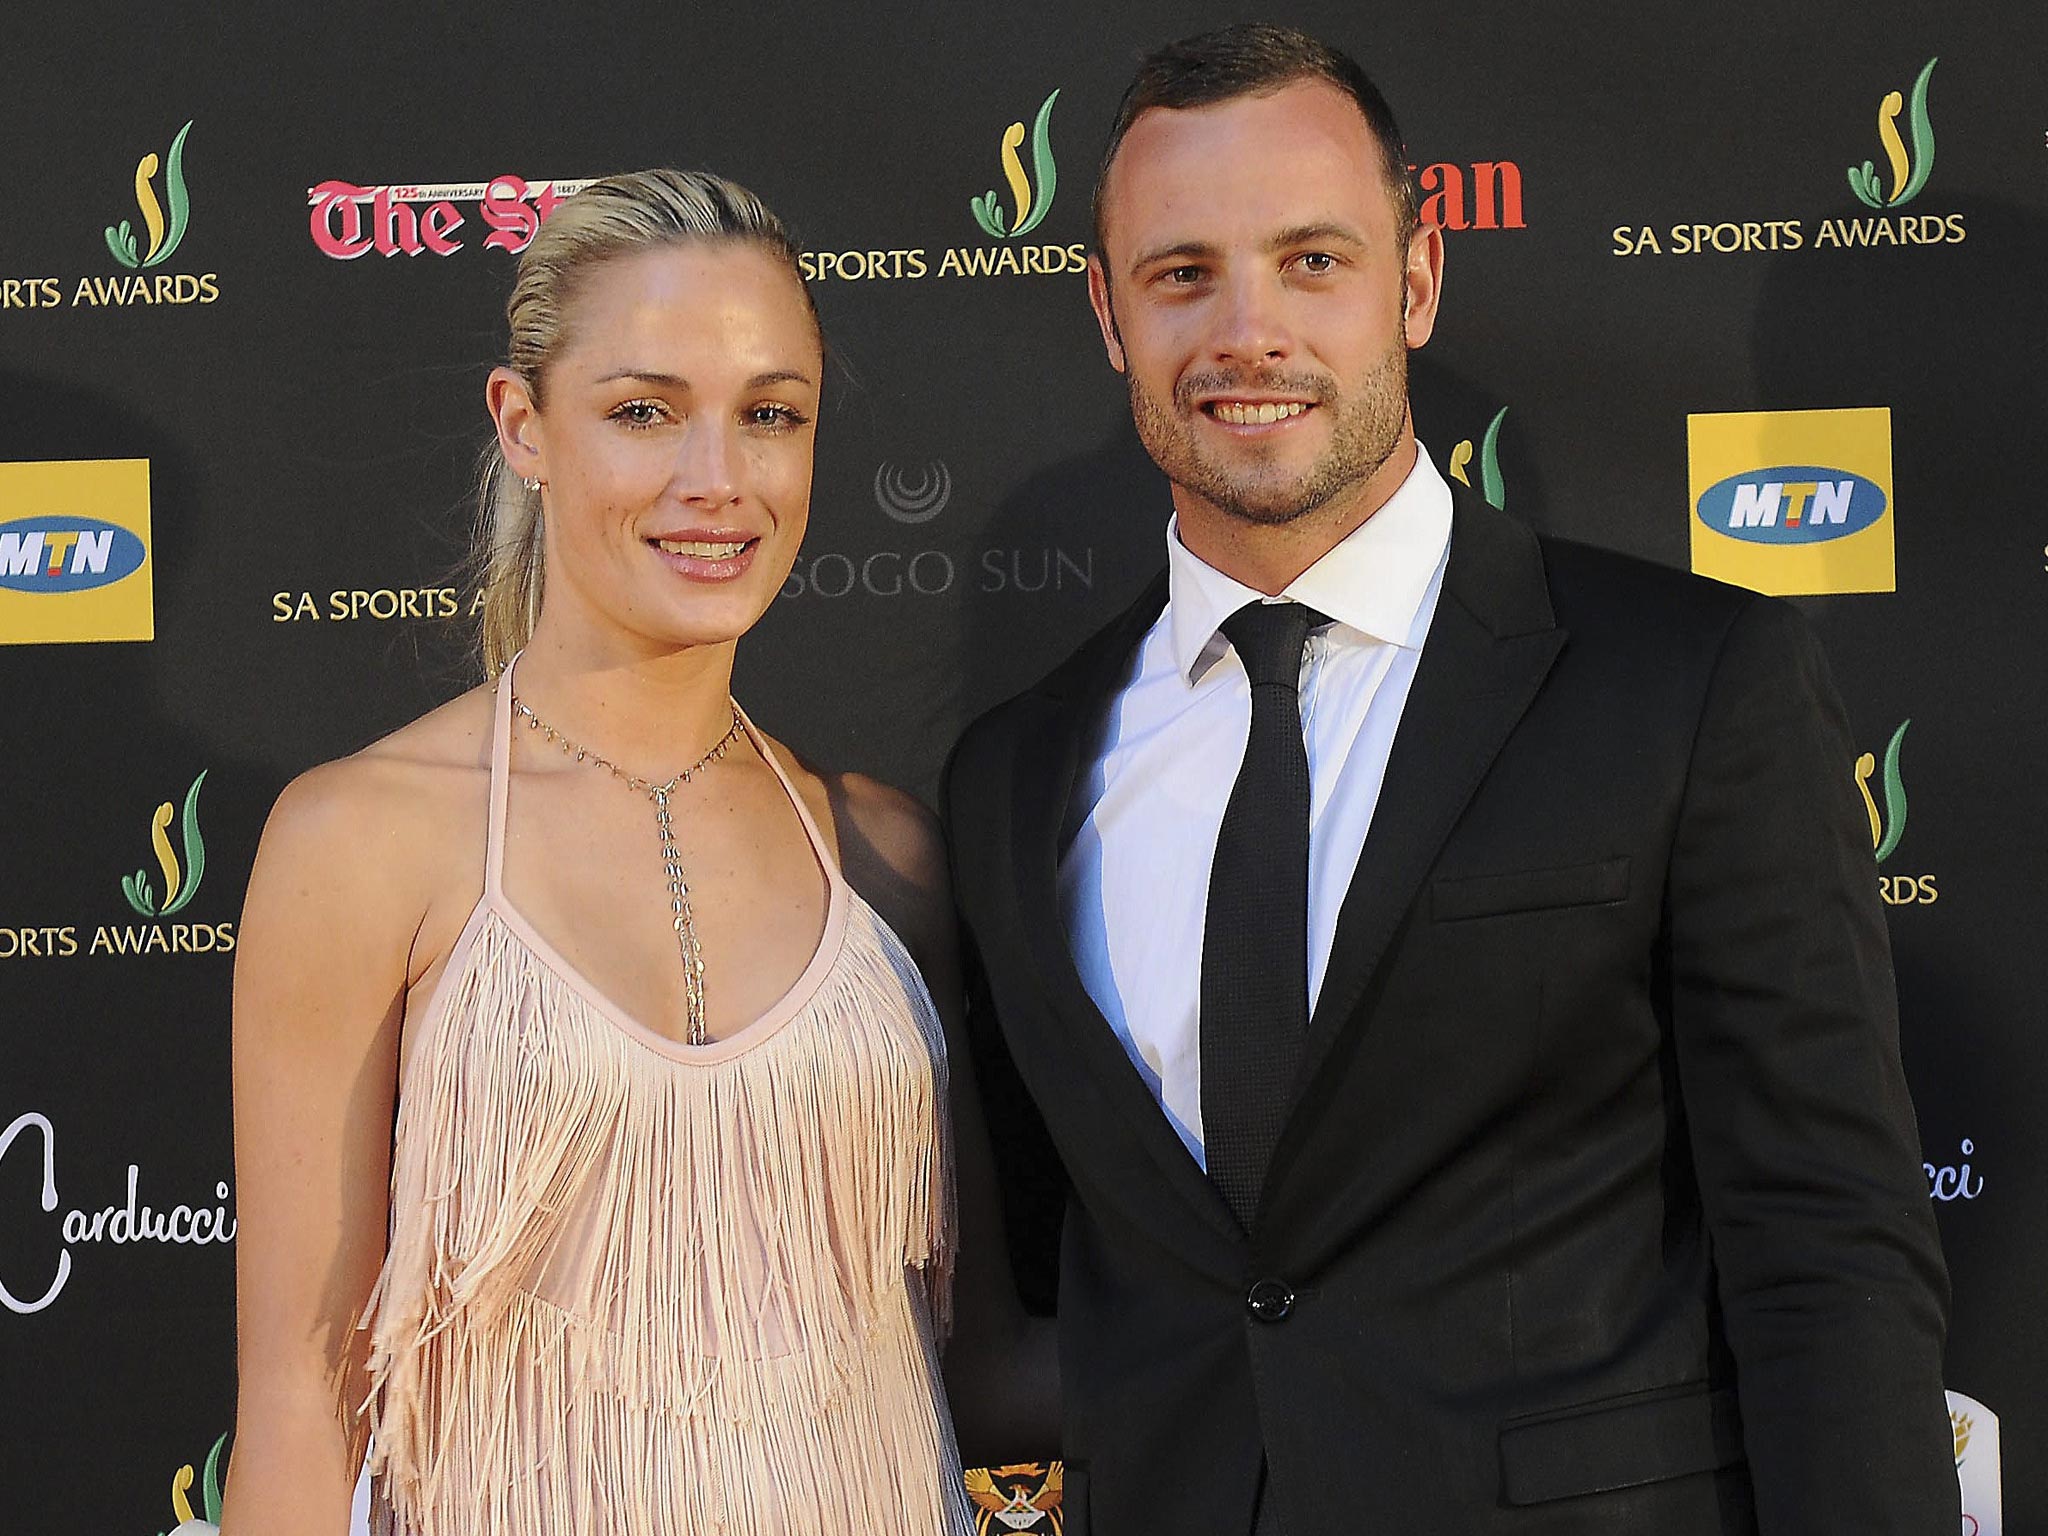 Oscar Pistorius shot his girlfriend Reeva Steenkamp dead at his house